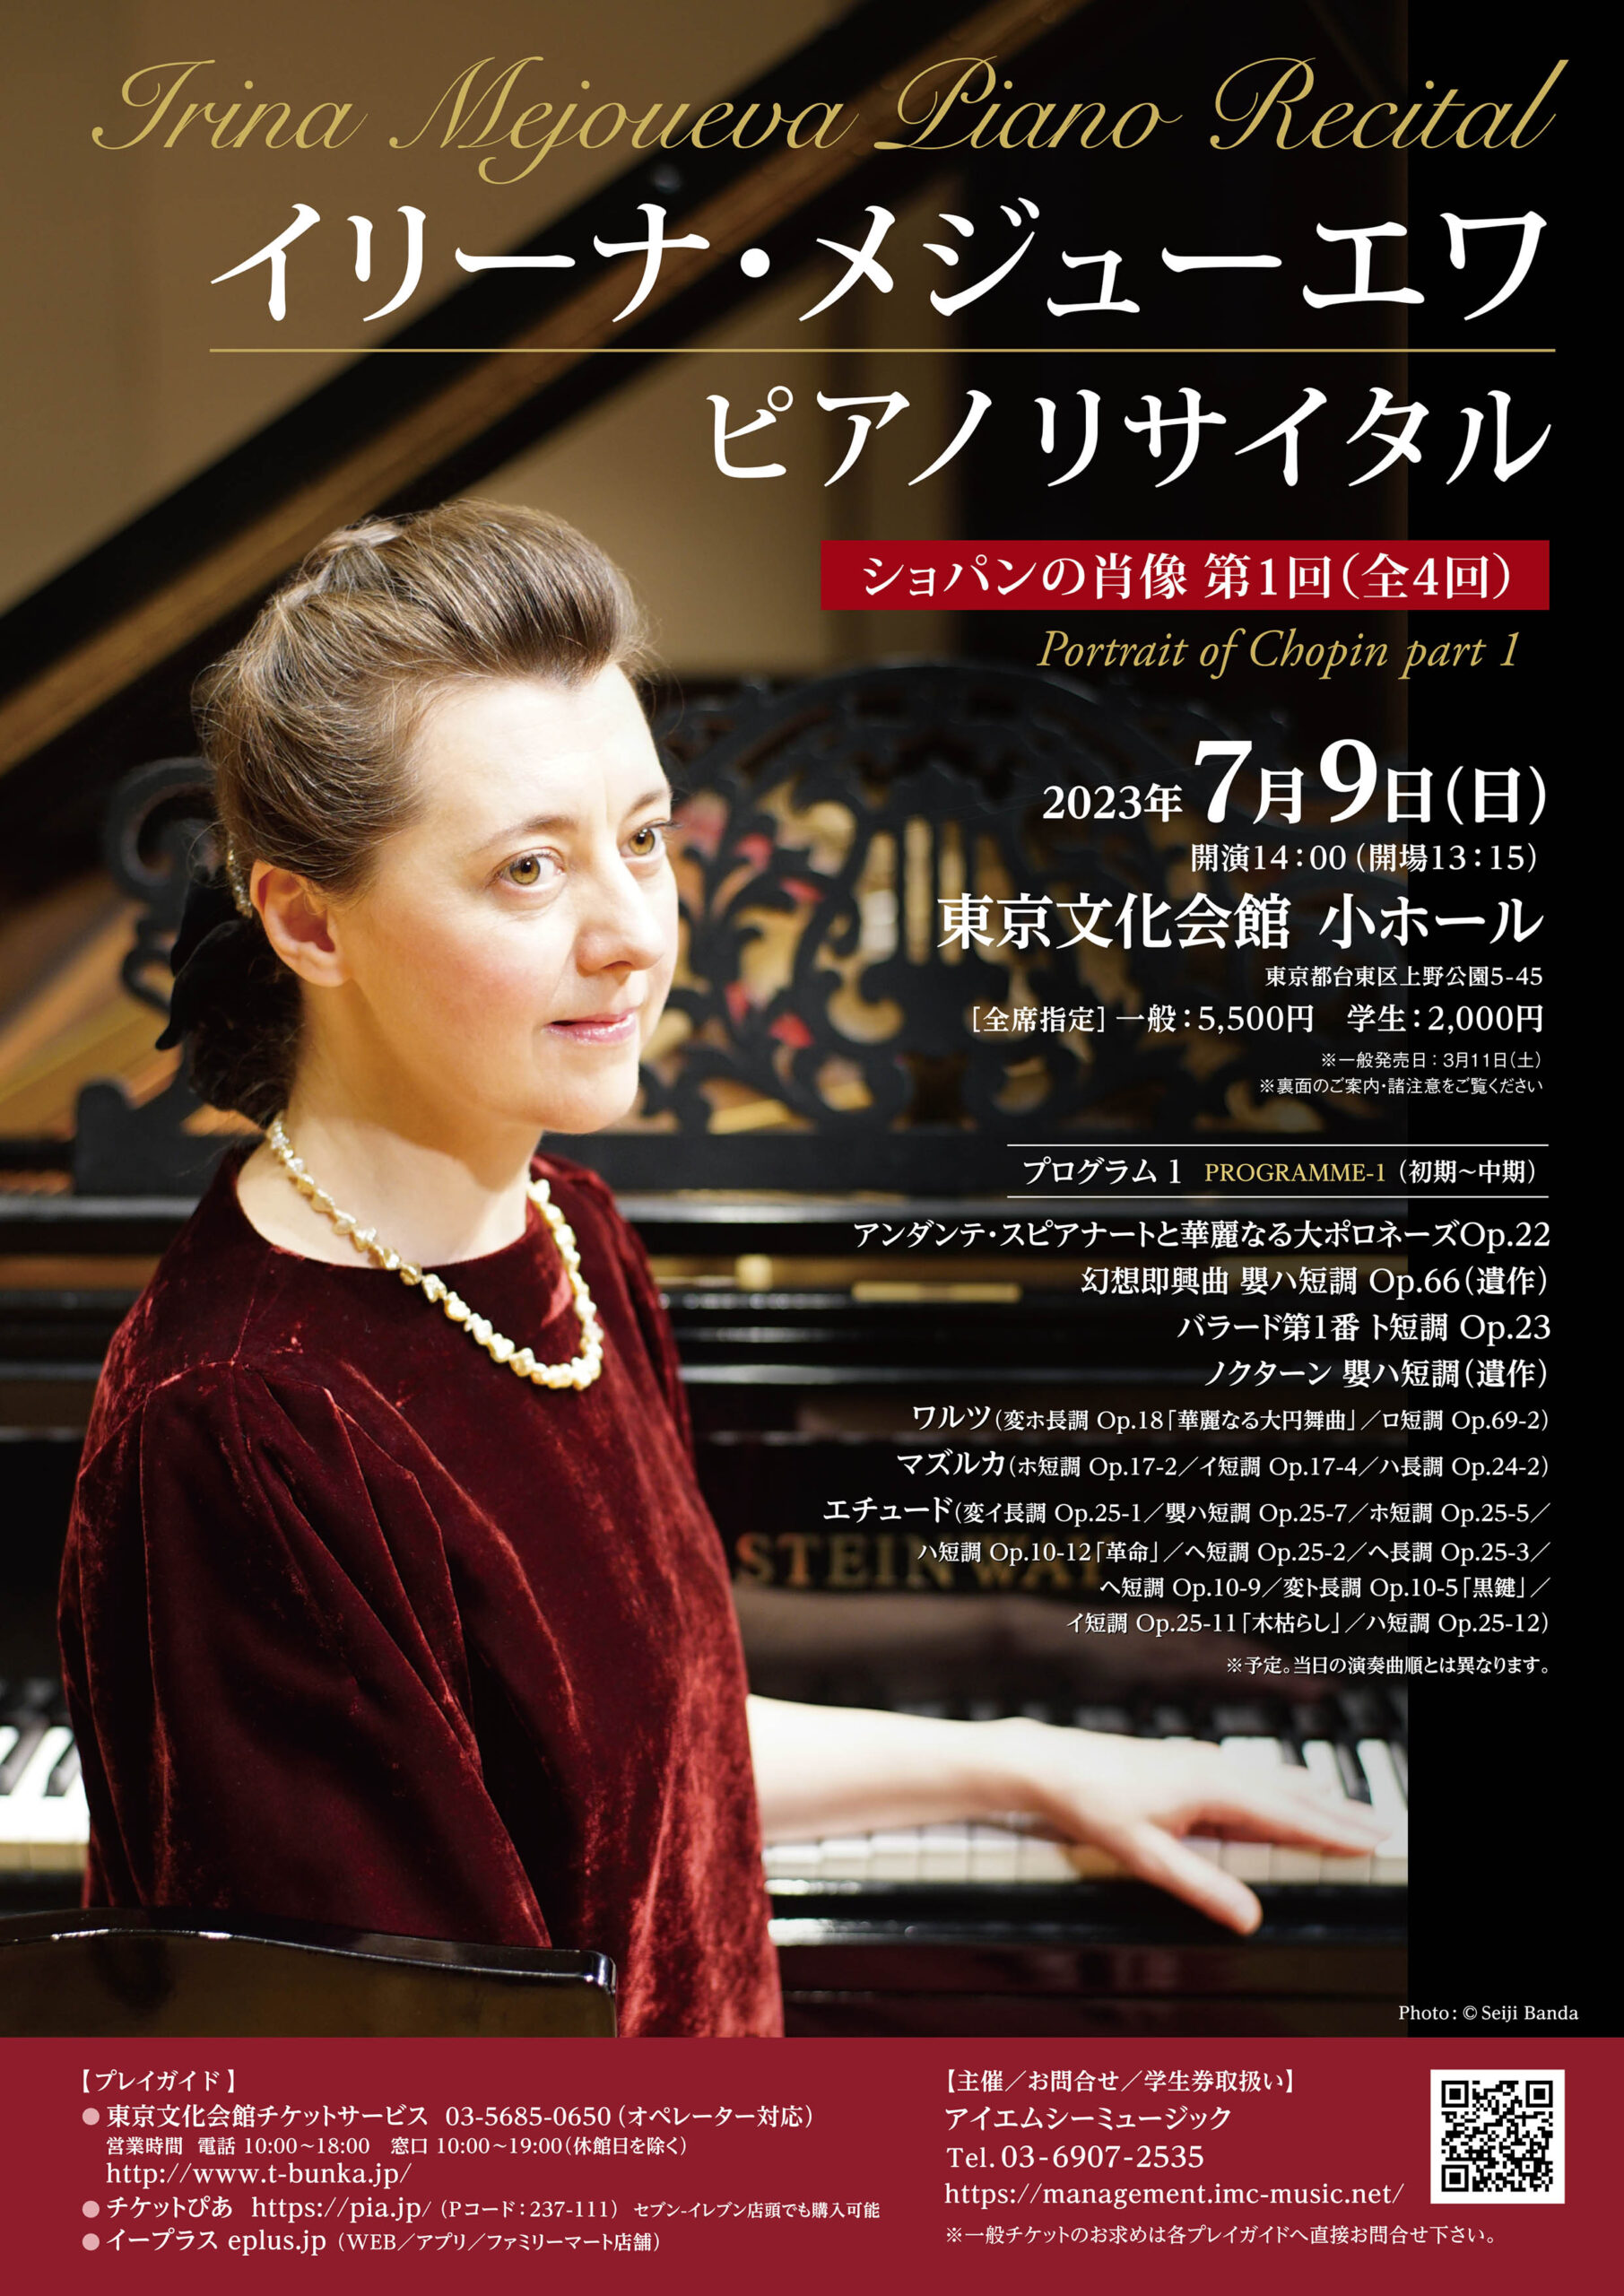 Irina Mejoueva Piano Recital - Portrait of Chopin part 1